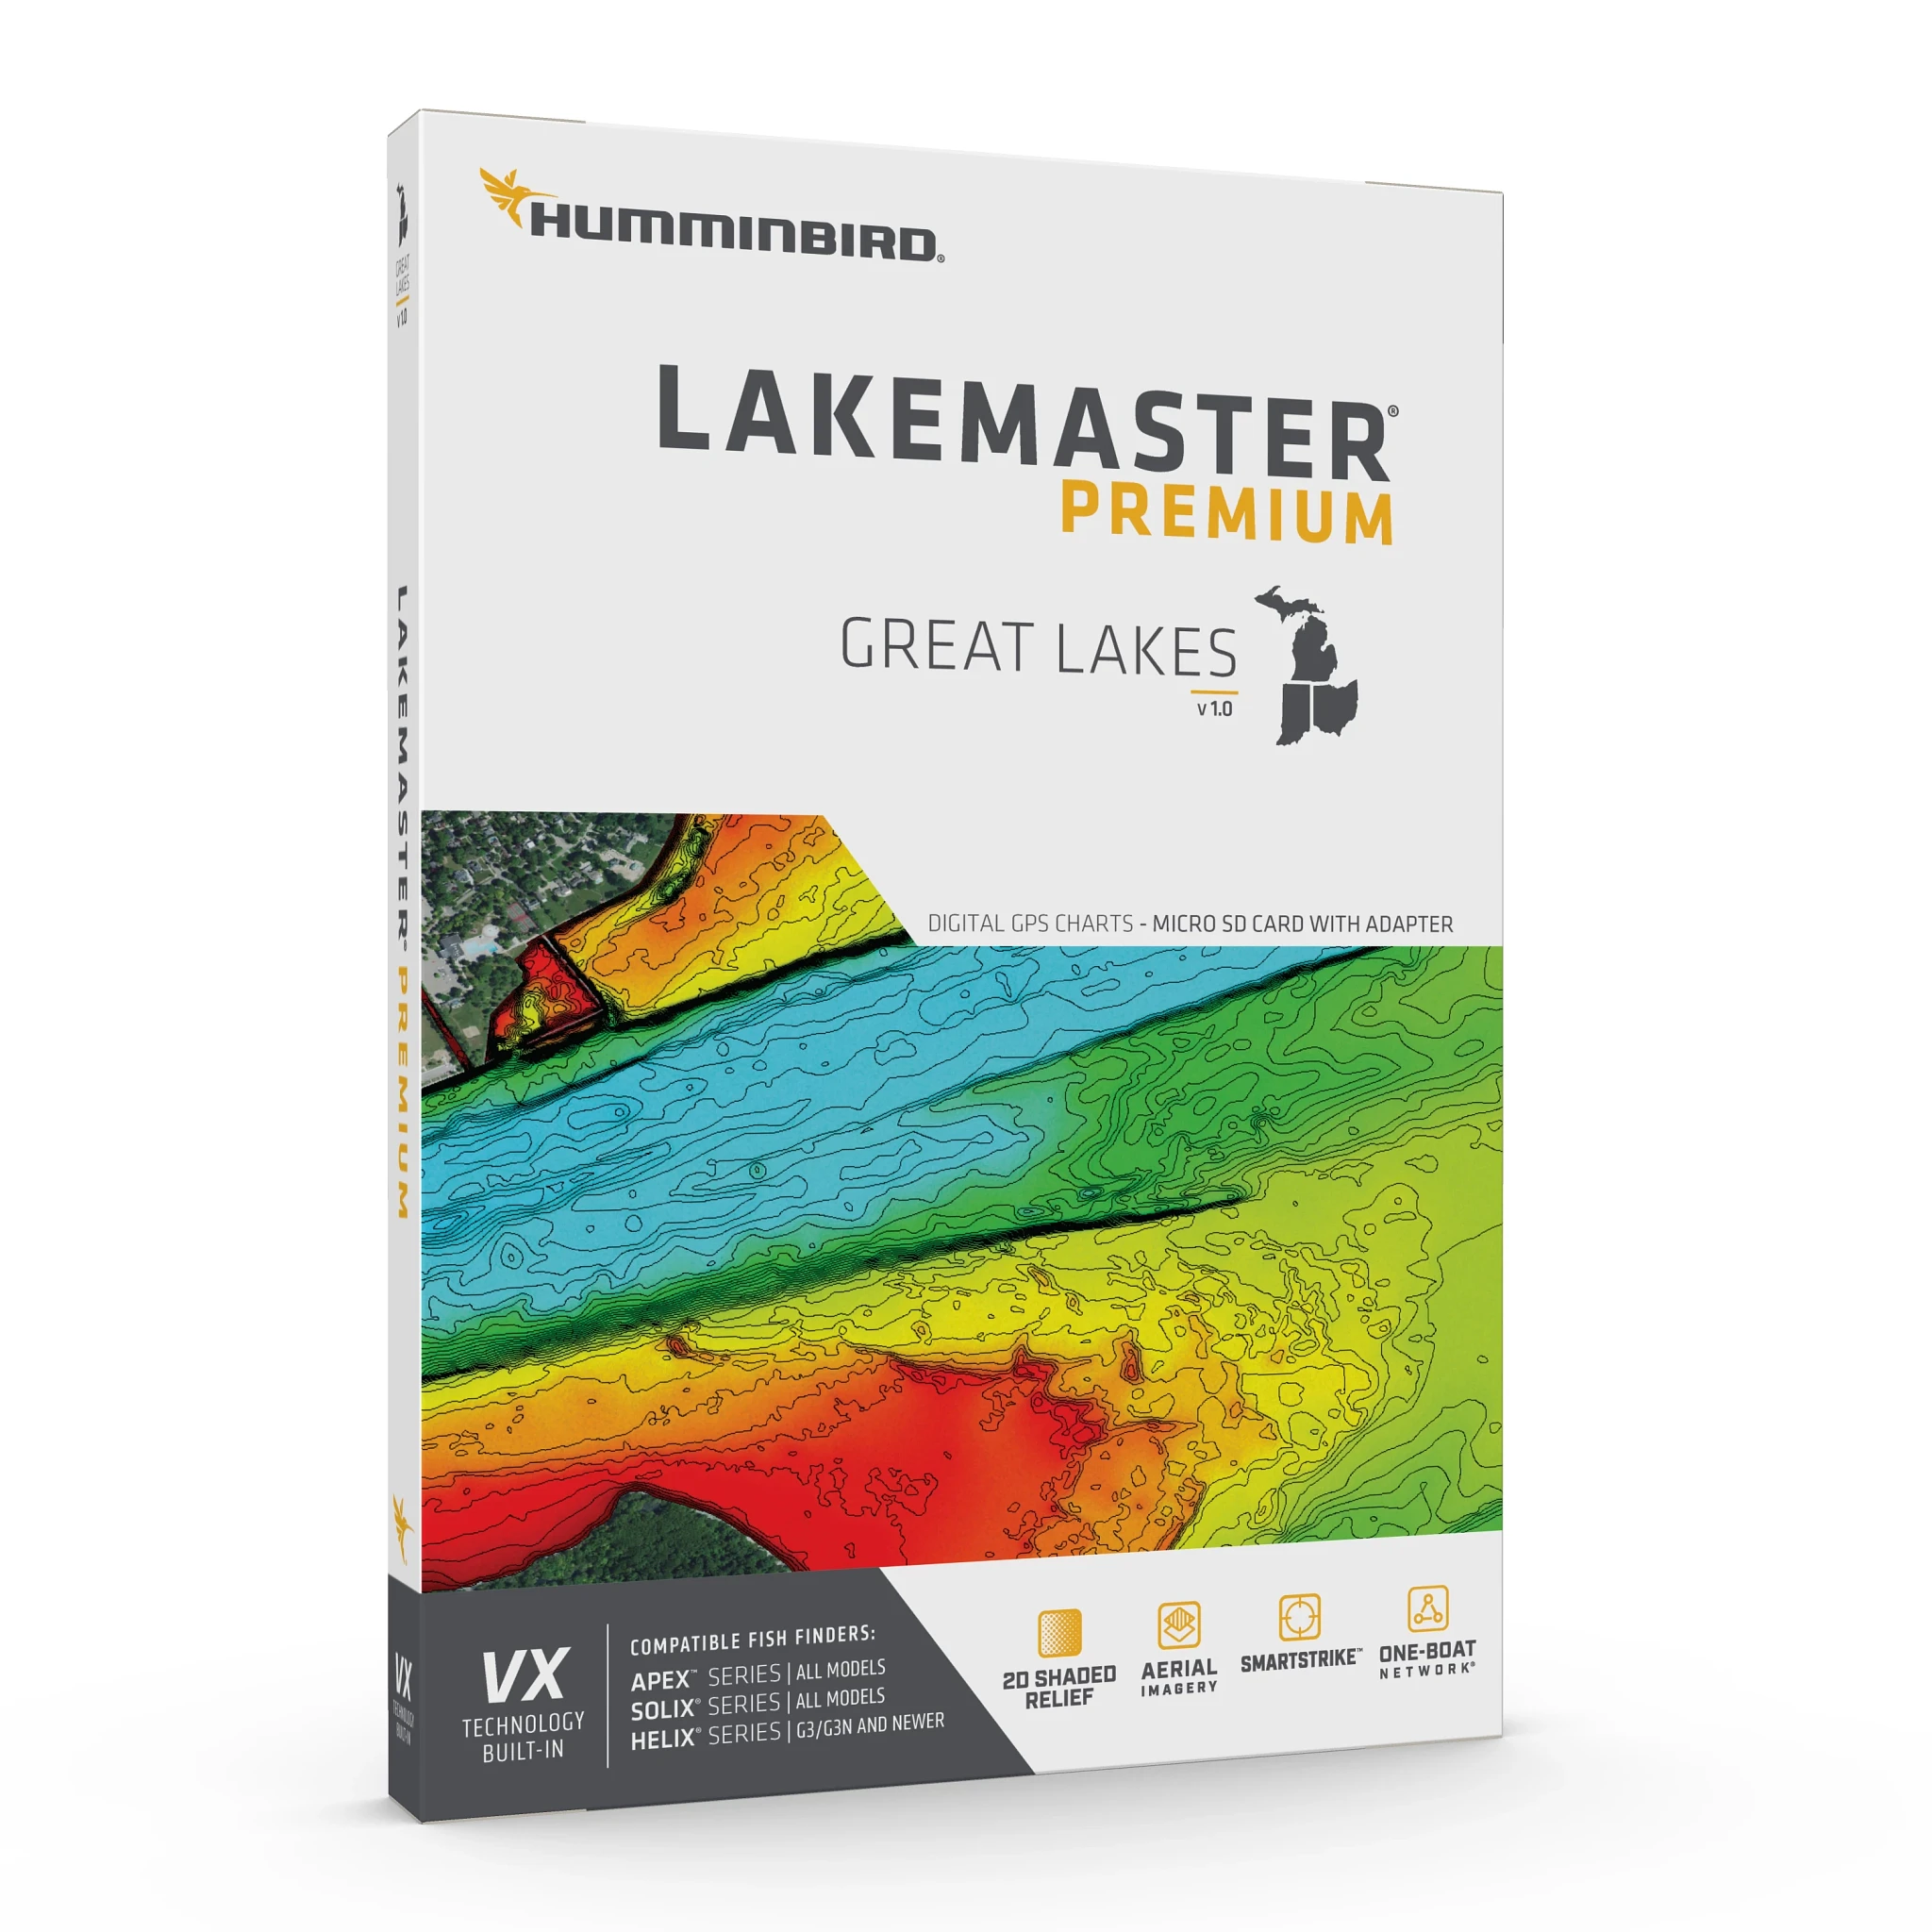 LakeMaster Premium - Great Lakes Packaging